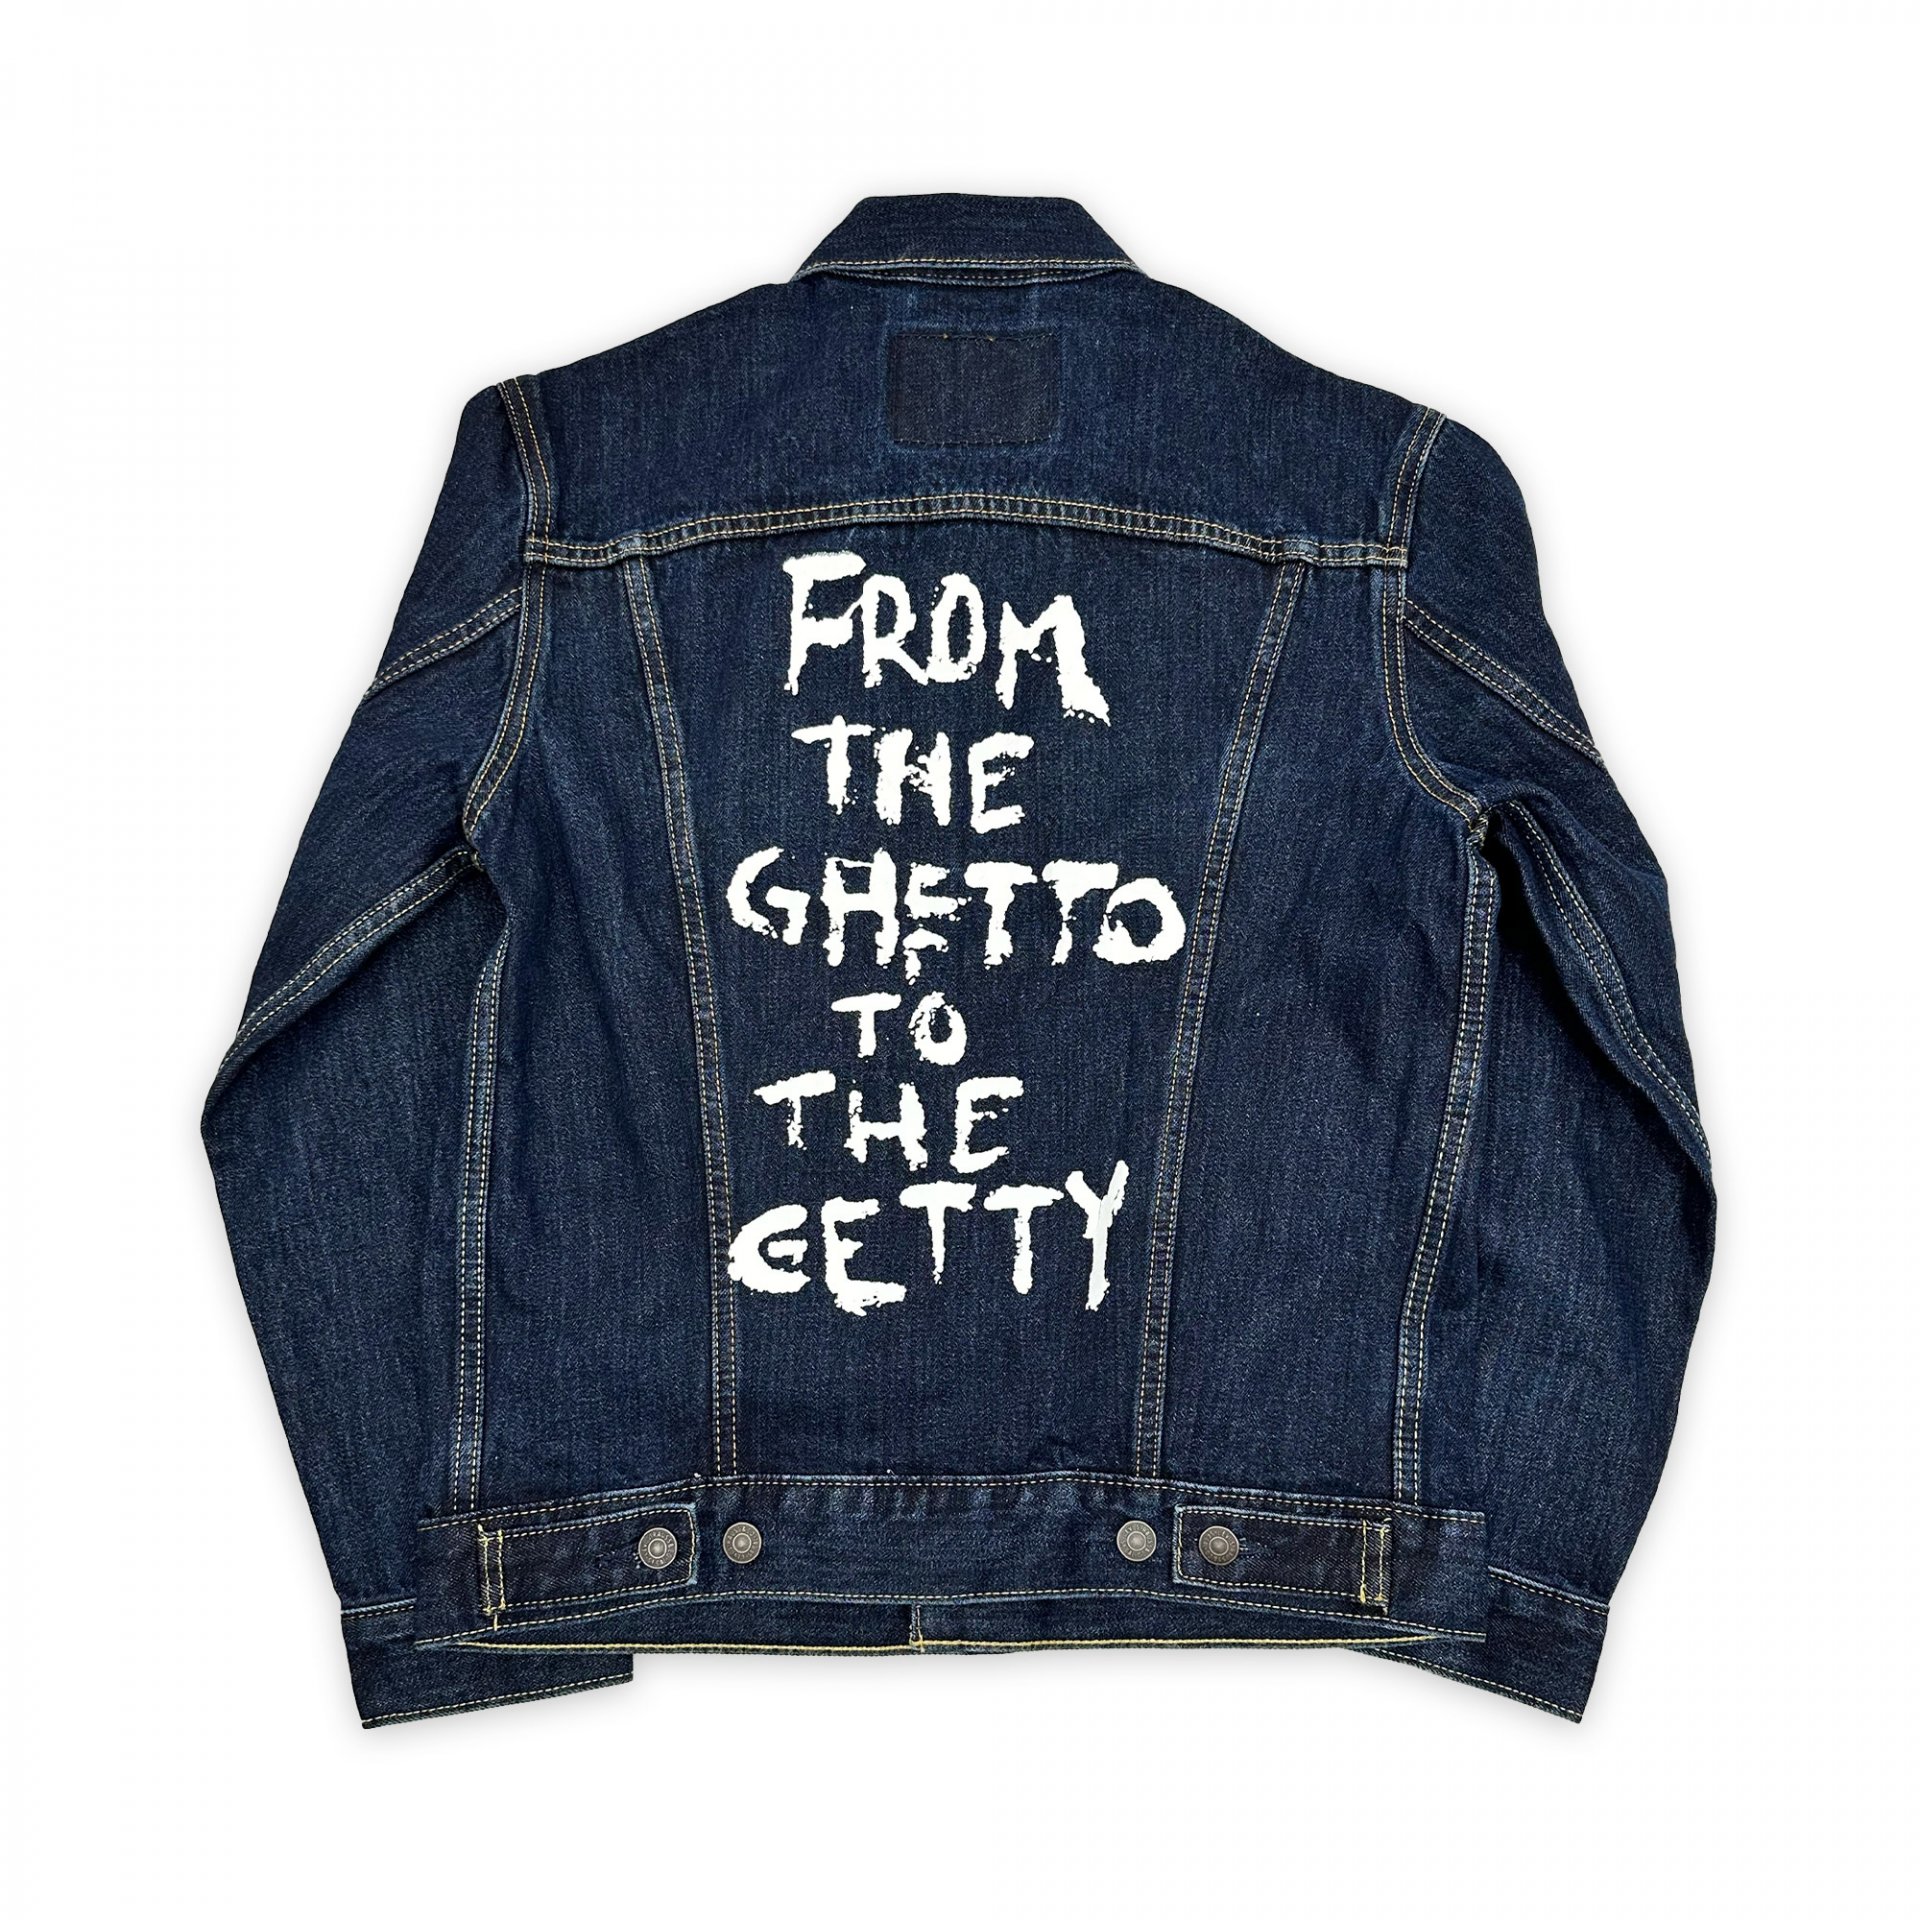 Jo Koy x Levi's from The Ghetto to The Getty Denim Jacket